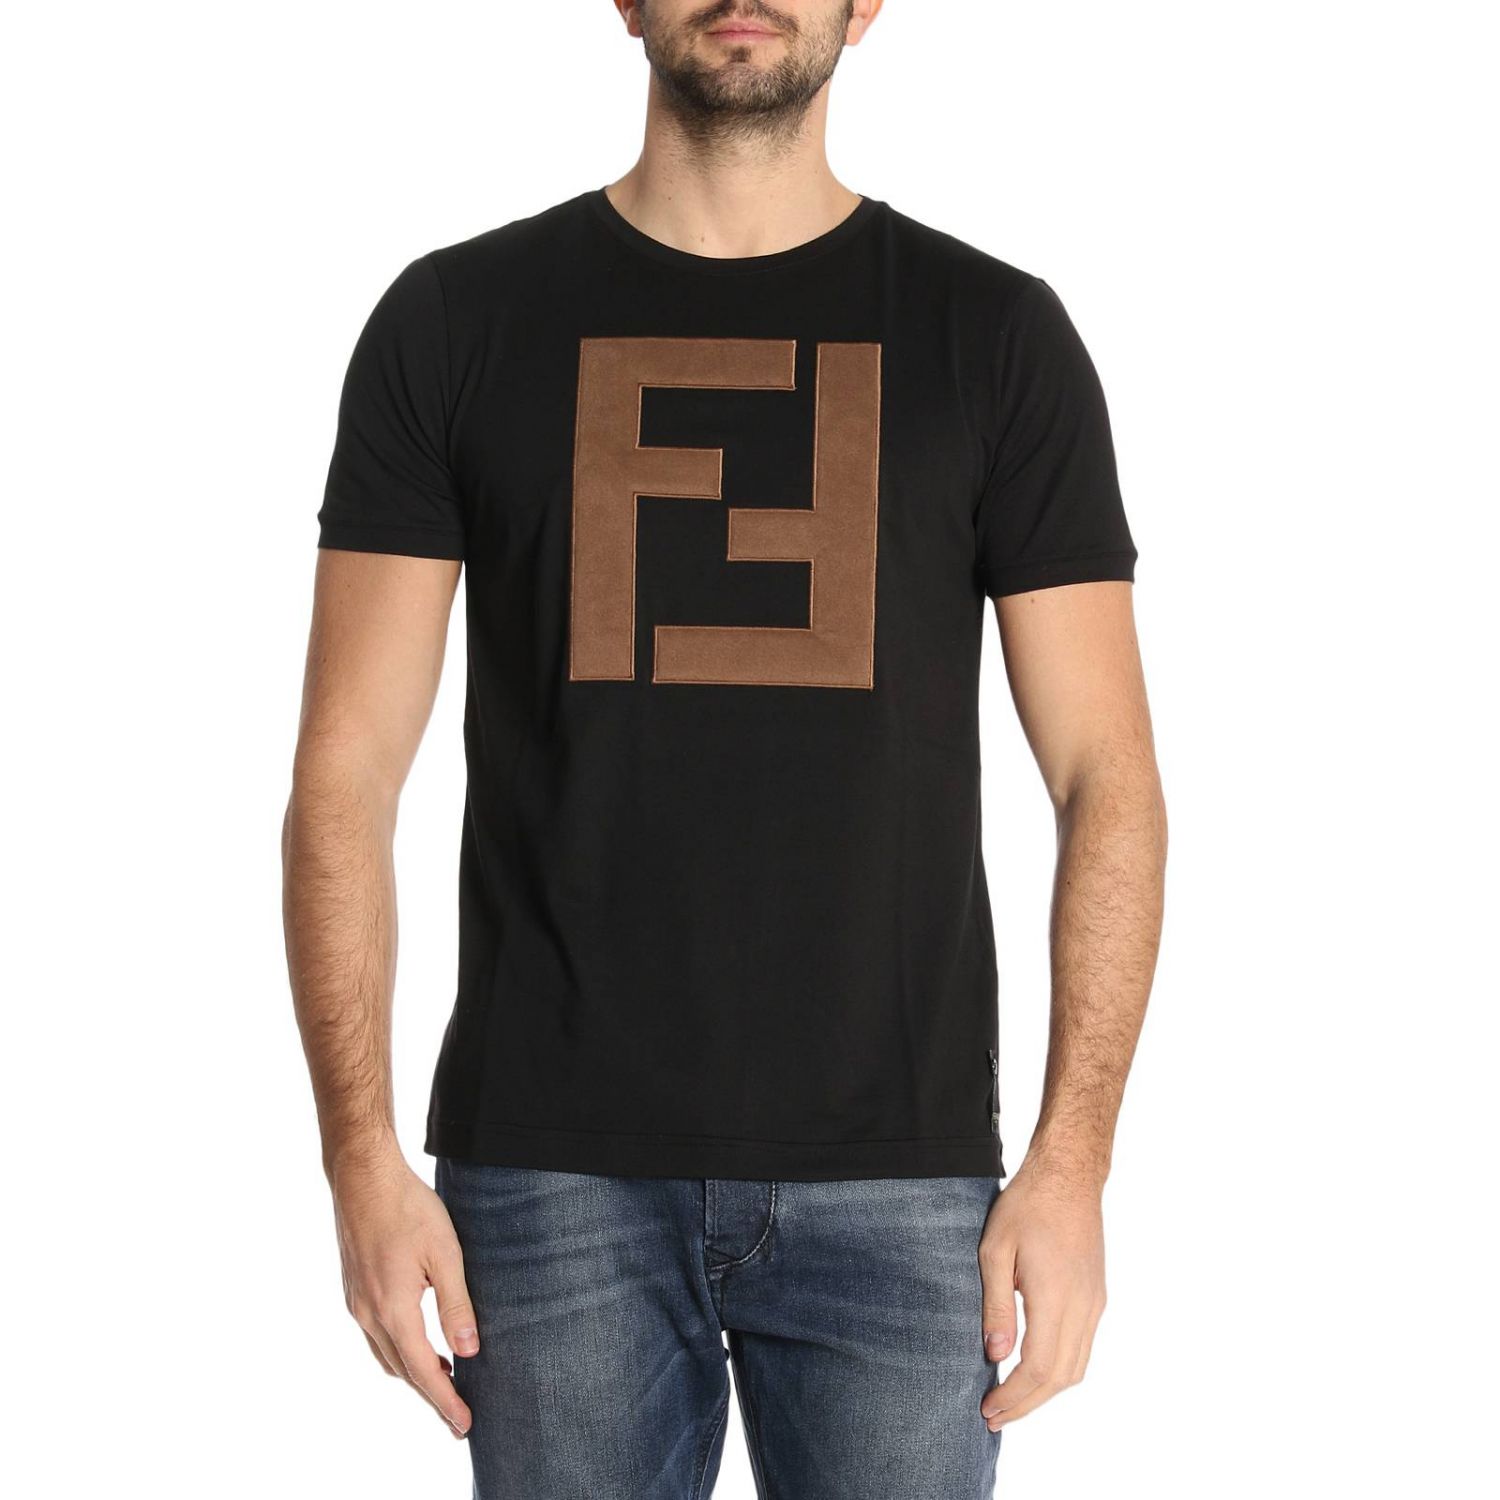 FENDI: T-shirt homme | T-Shirt Fendi Homme Noir | T-Shirt Fendi FY0894